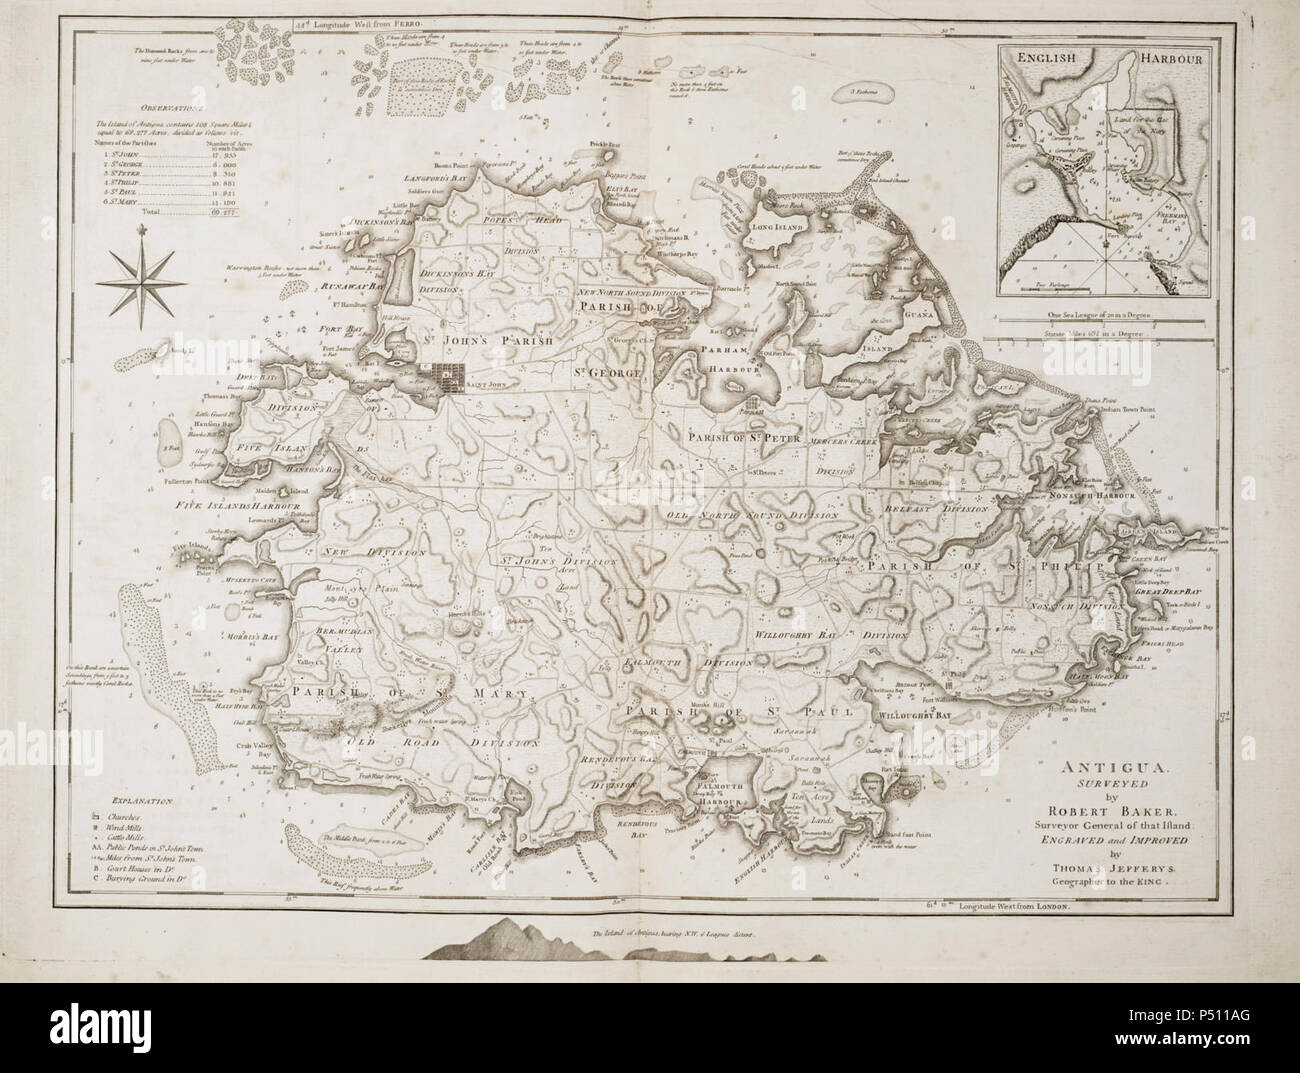 1775 map of Antigua by Robert Baker, updated by Thomas Jefferys. Stock Photo